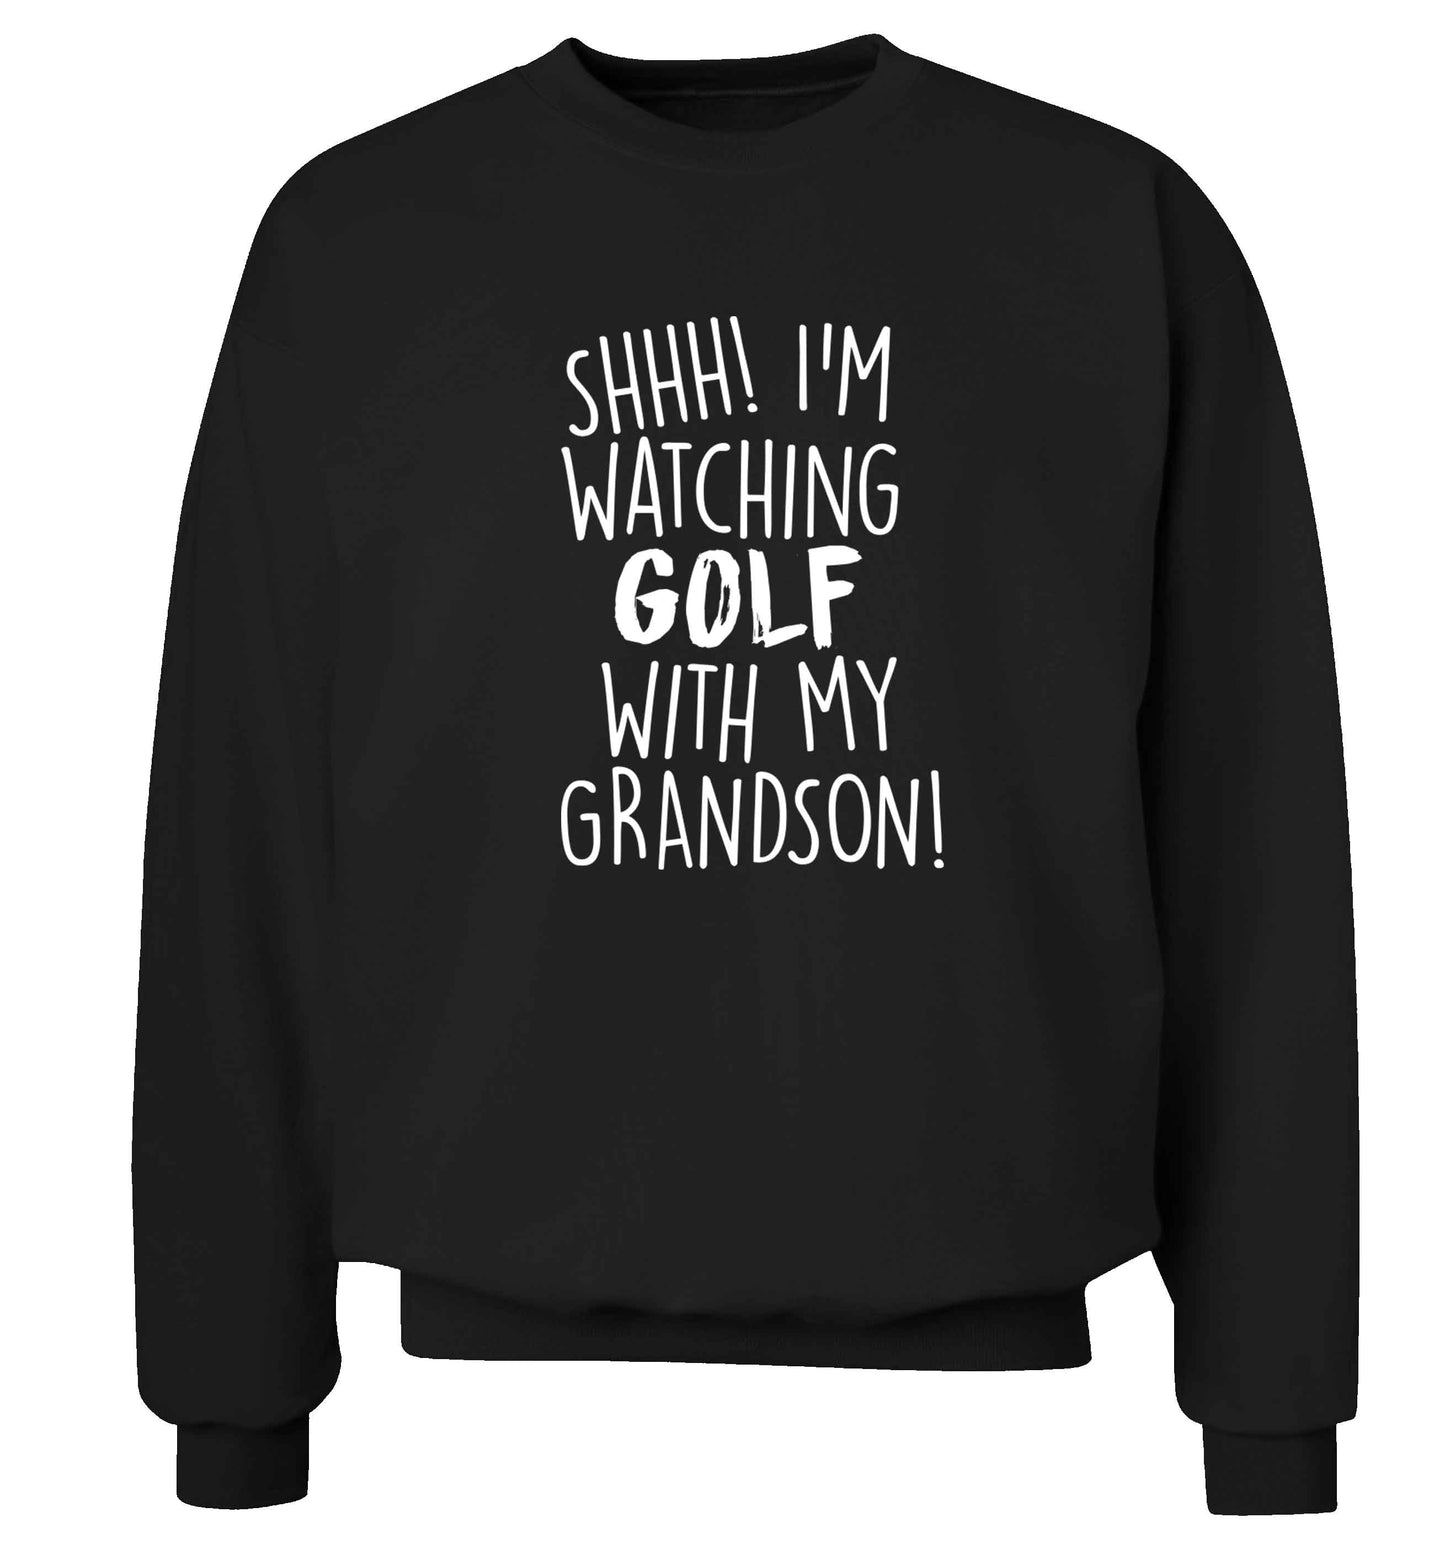 Shh I'm watching golf with my grandsonAdult's unisex black Sweater 2XL